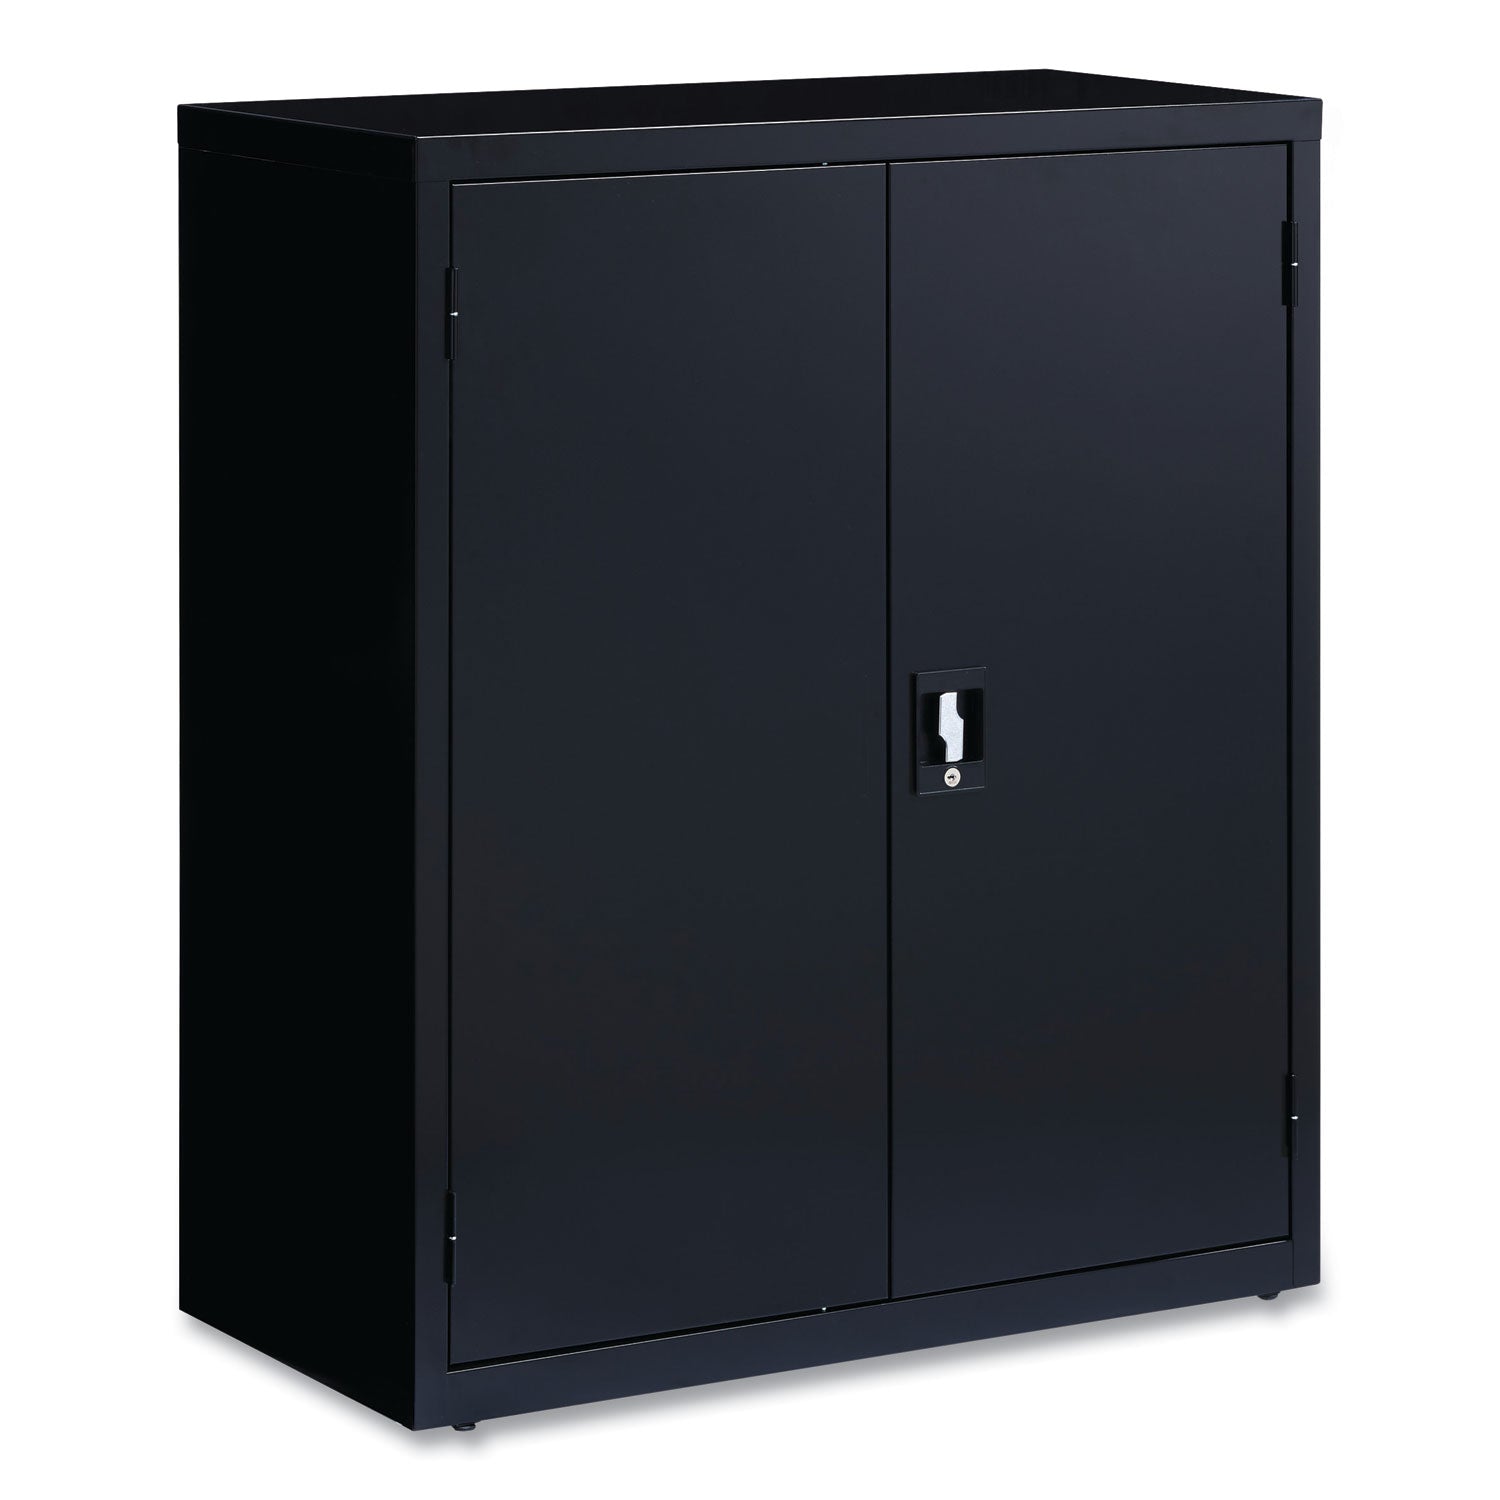 fully-assembled-storage-cabinets-3-shelves-36-x-18-x-42-black_oifcm4218bk - 2